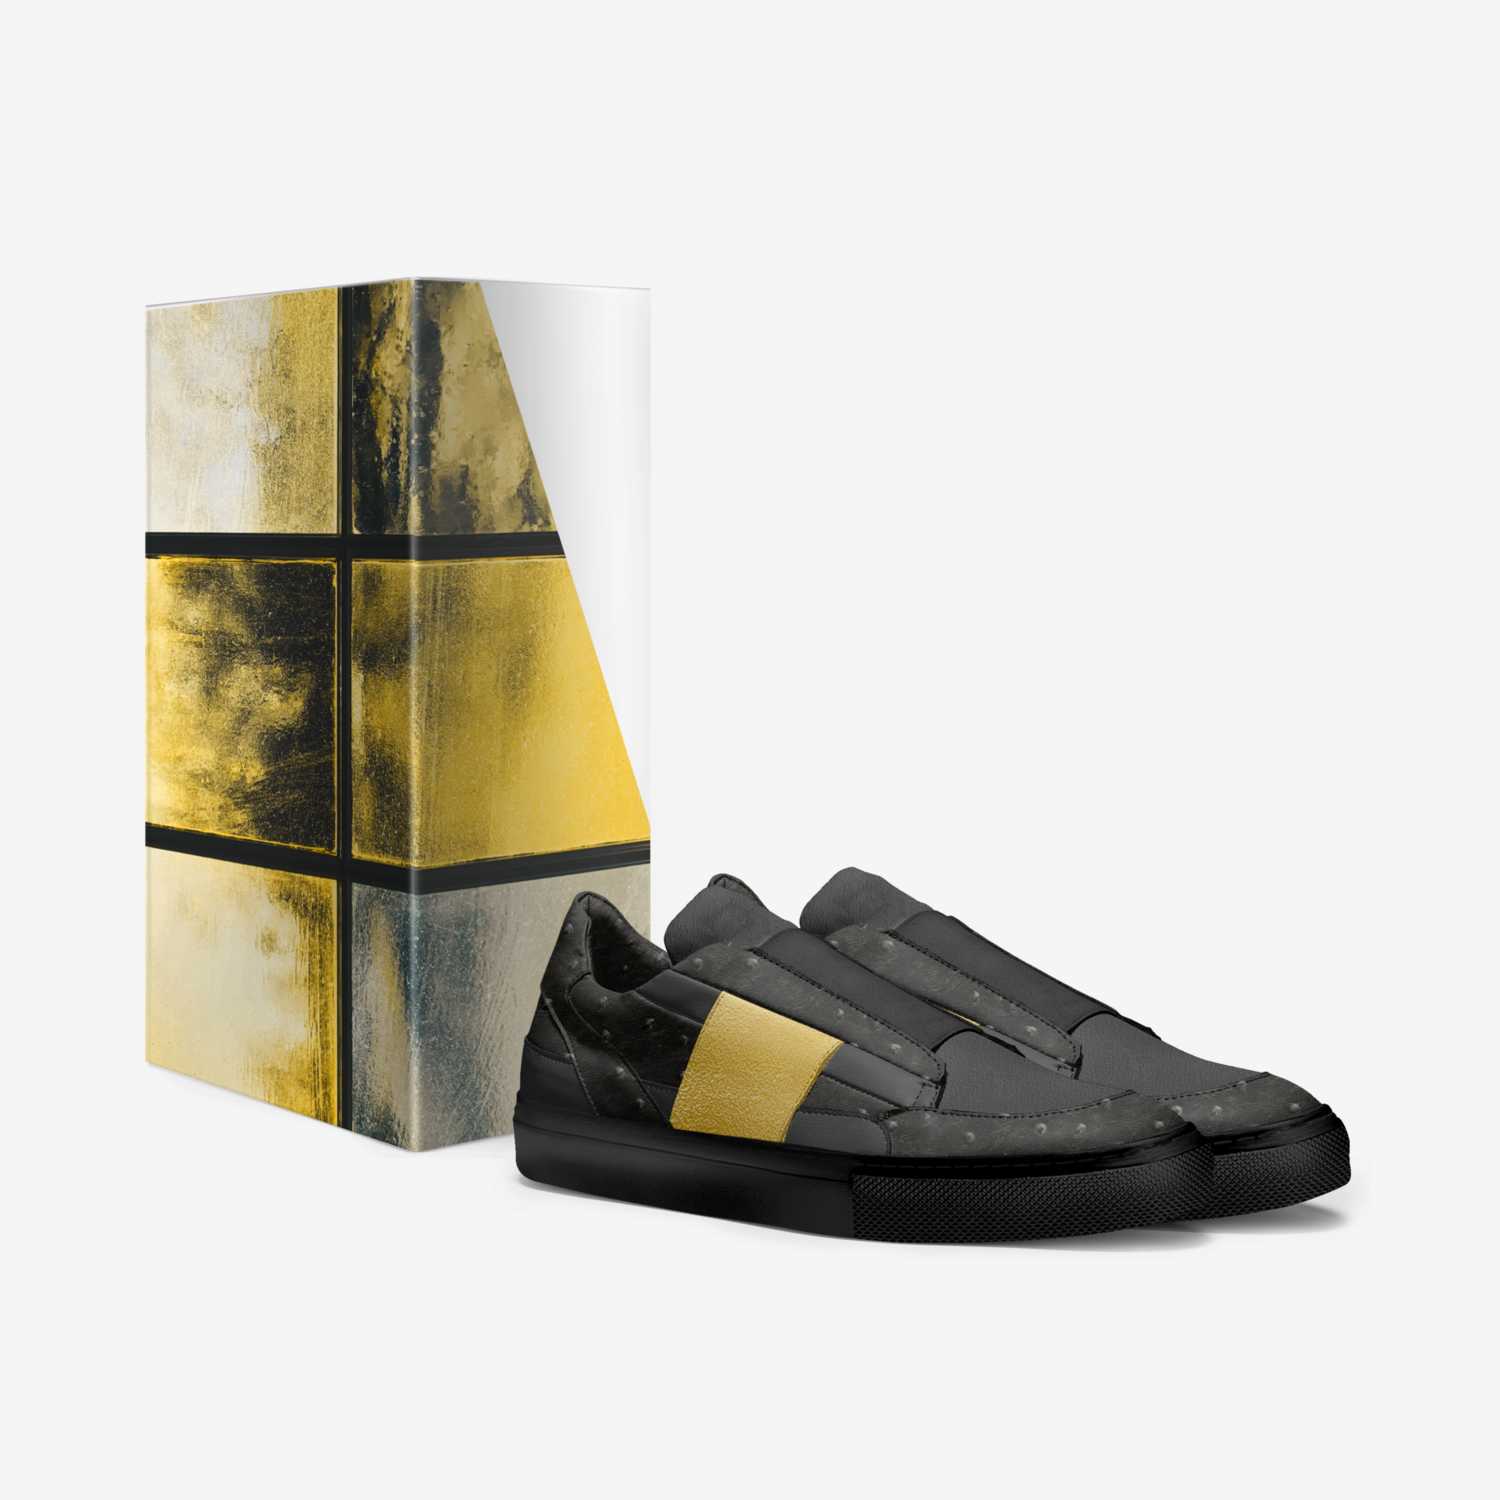 ZERO EFFORT custom made in Italy shoes by Jonas Elzy | Box view